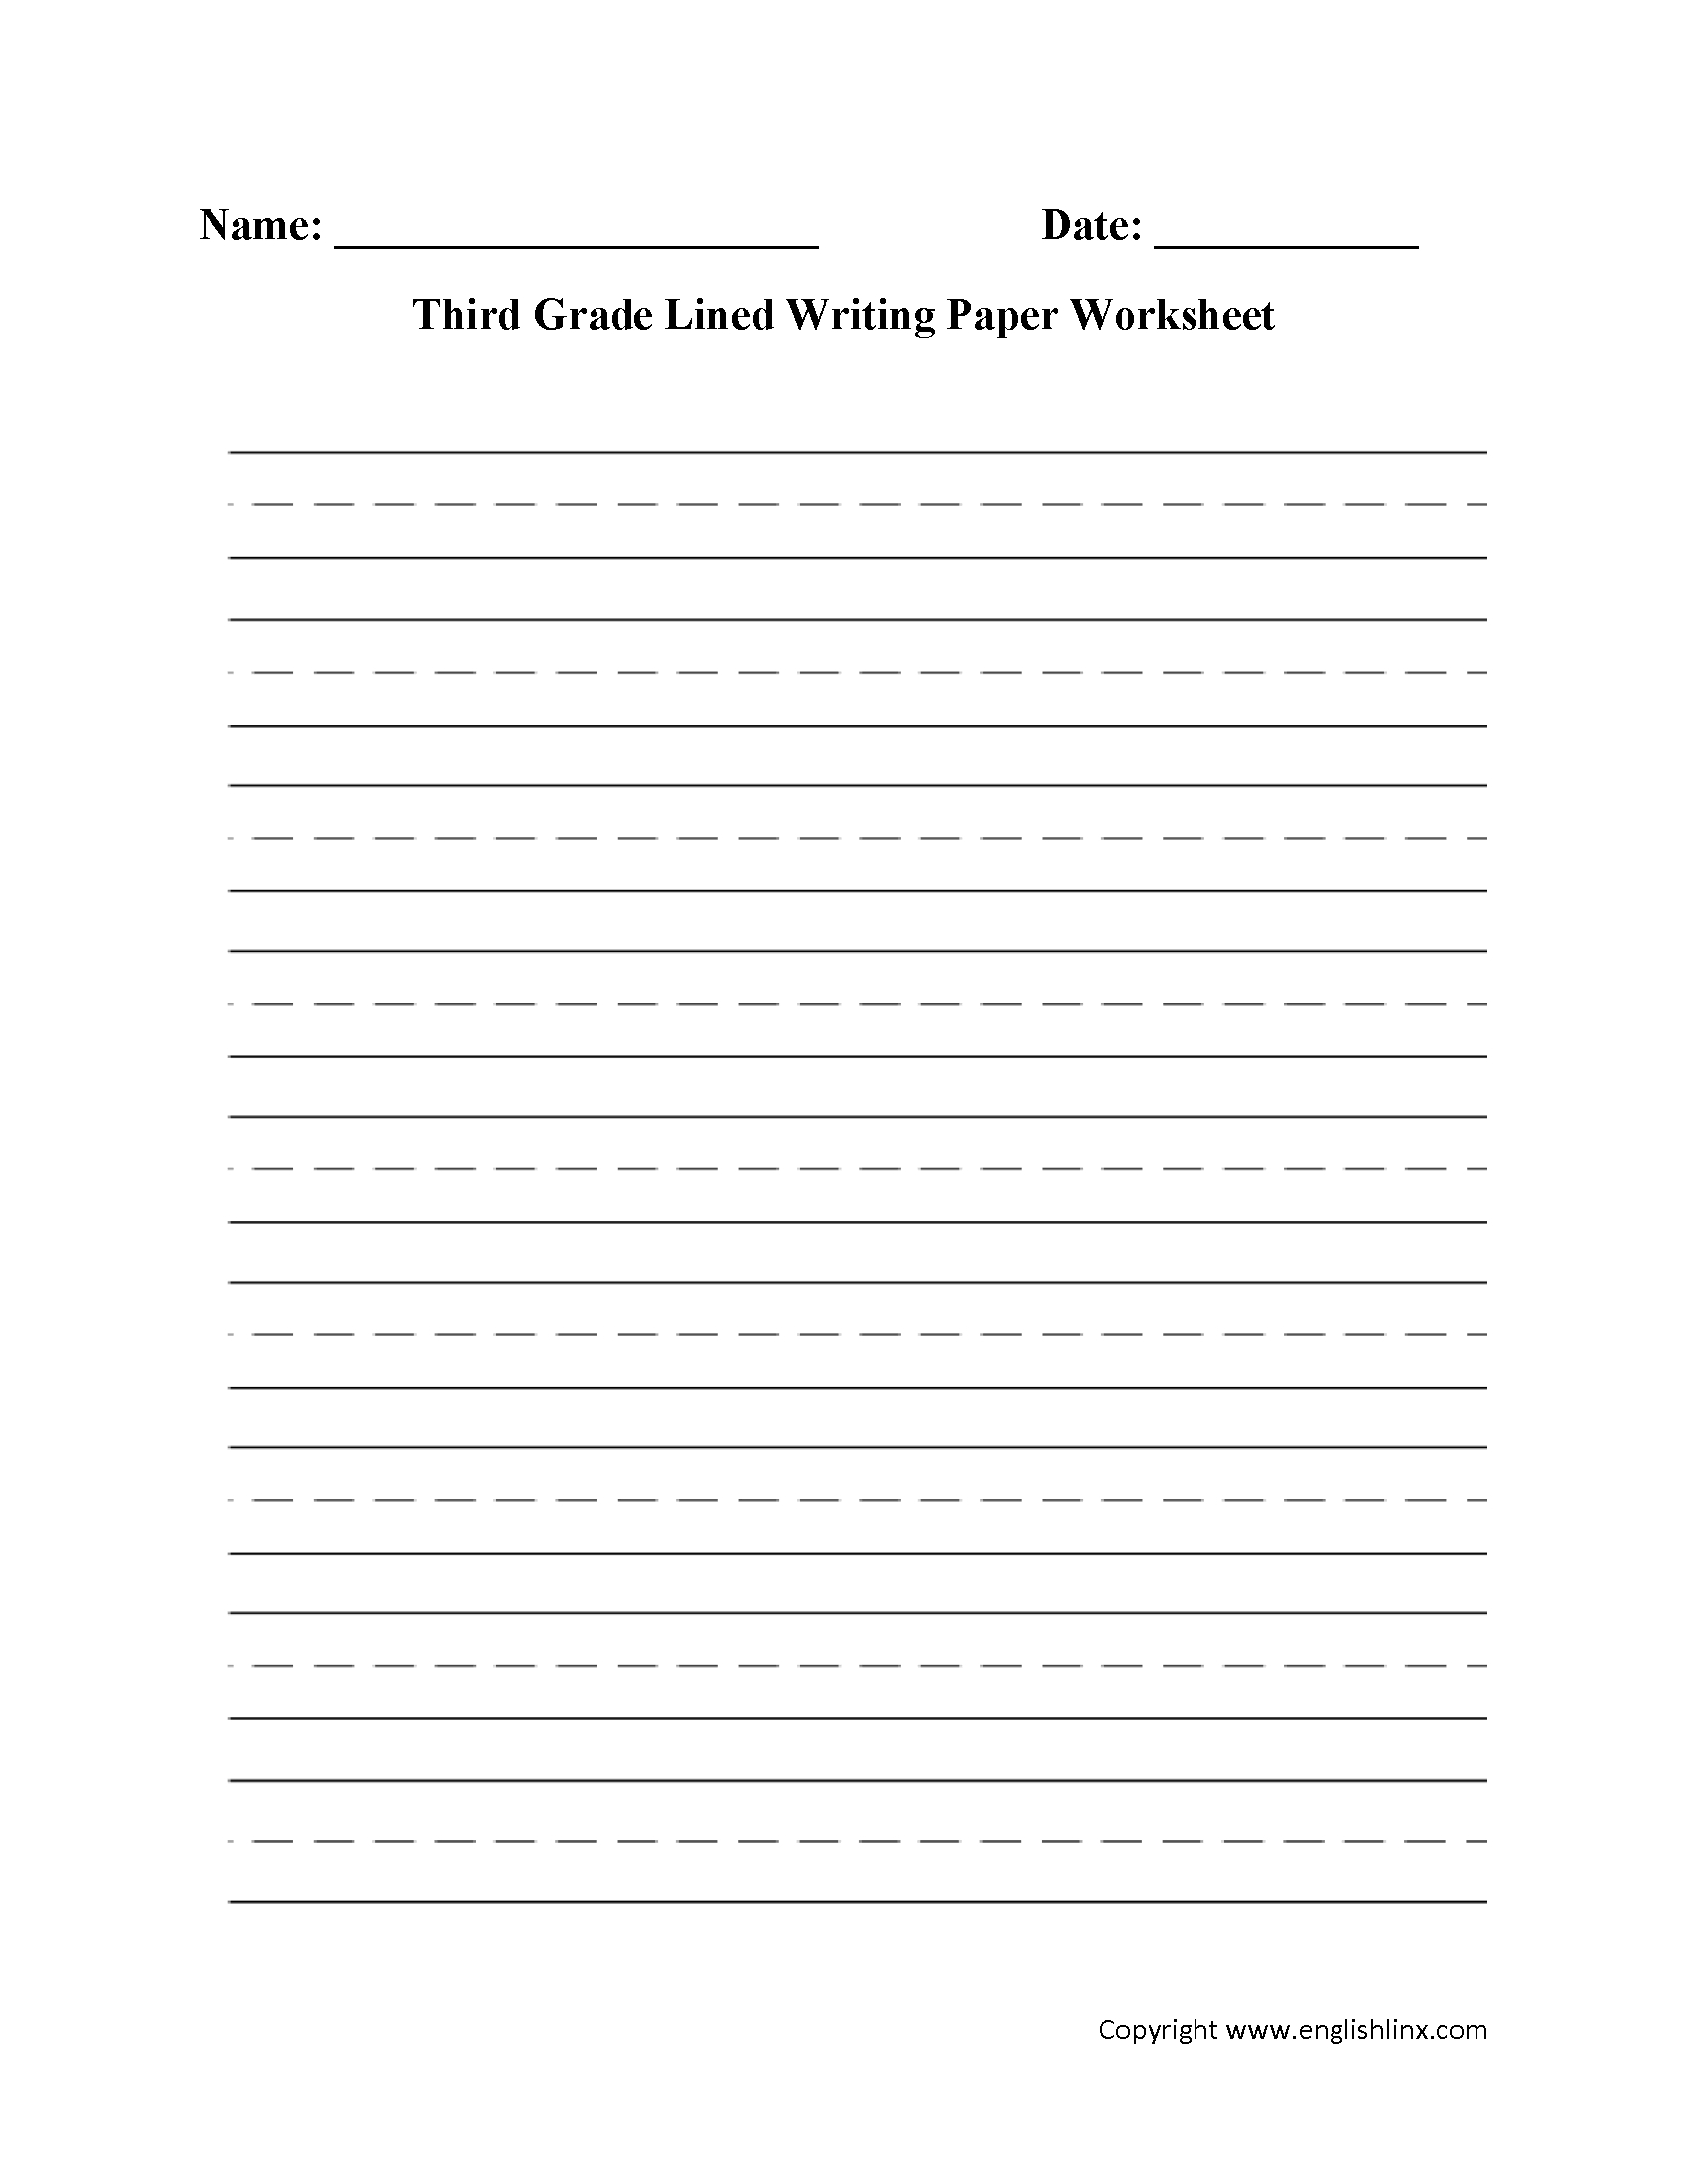 Writing Worksheets | Lined Writing Paper Worksheets - Free Printable Writing Sheets